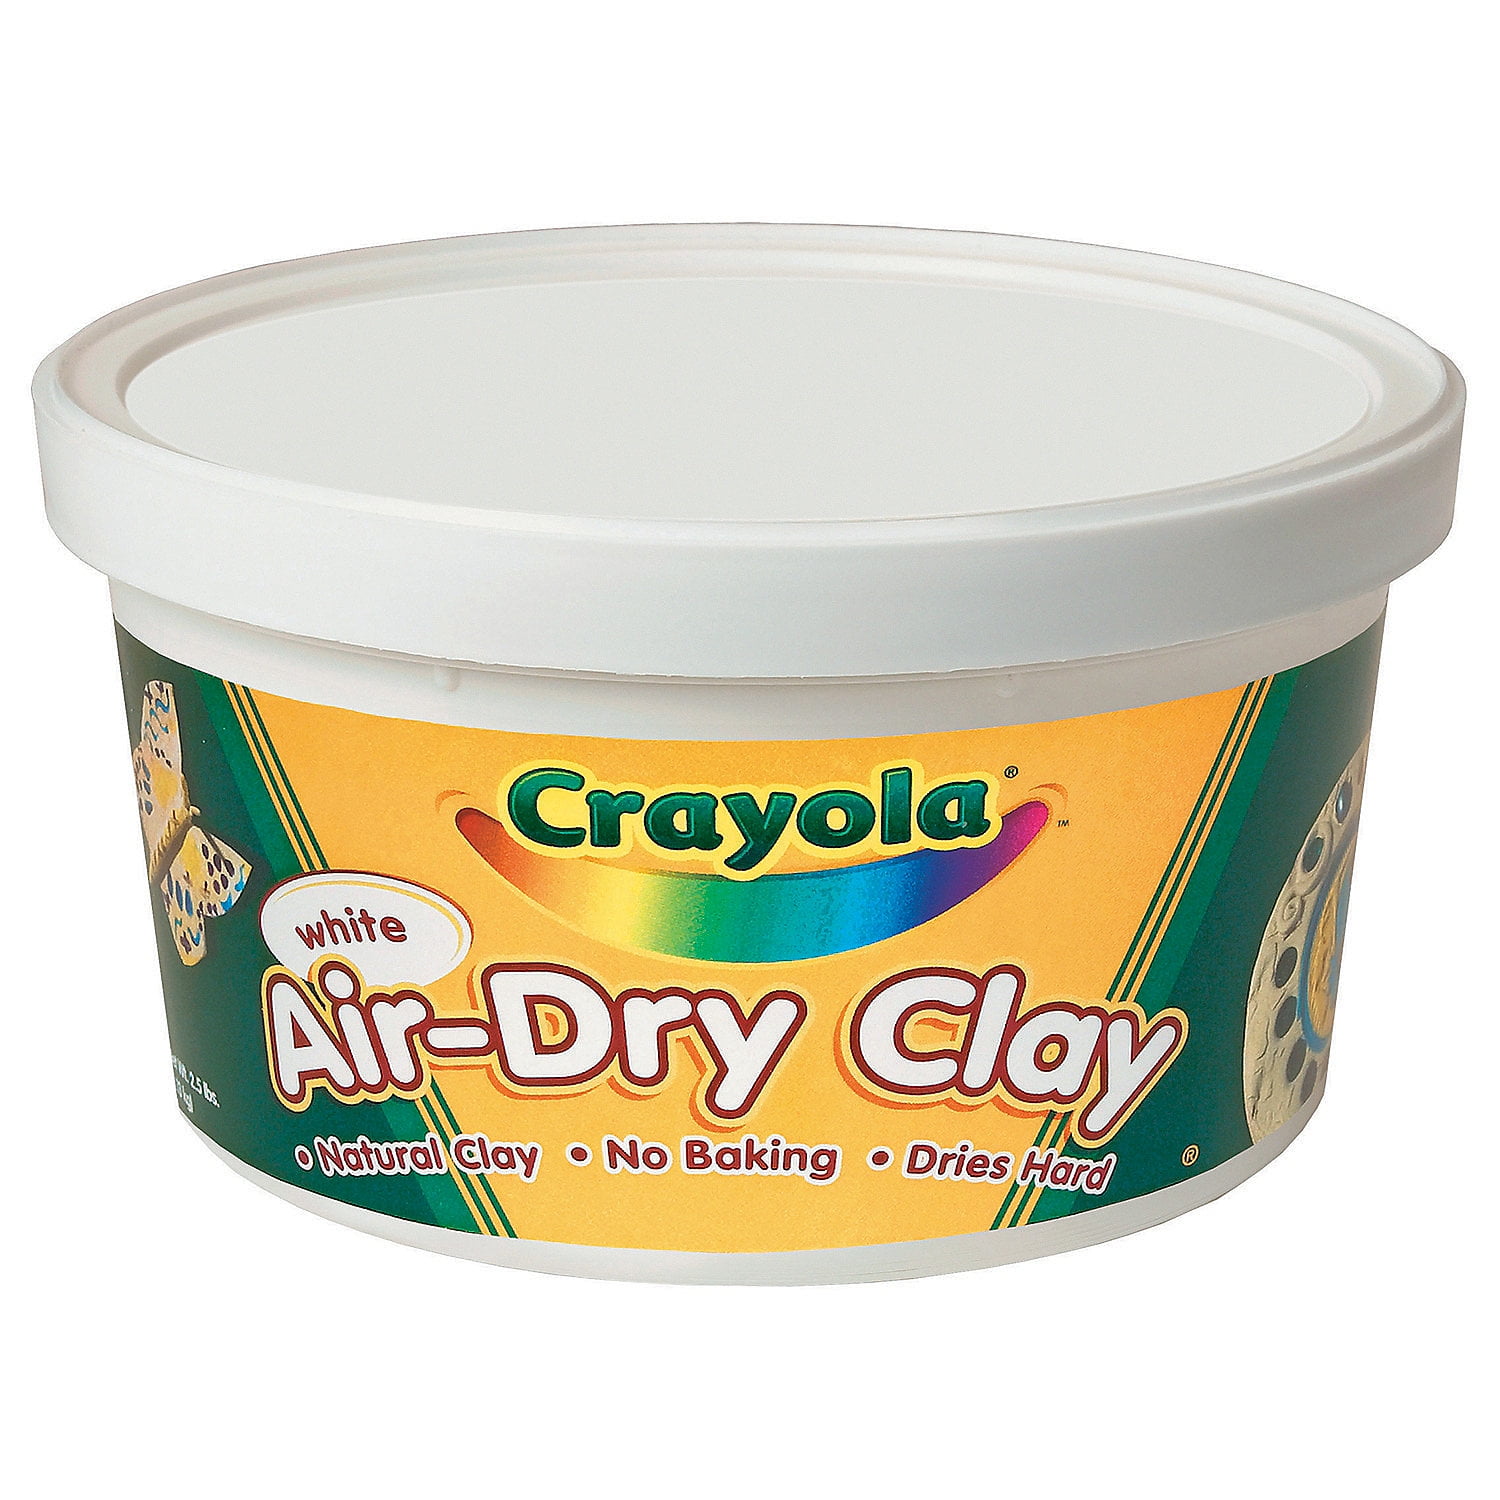 Crayola Air-Dry Clay - Bucket, 5 lb, White